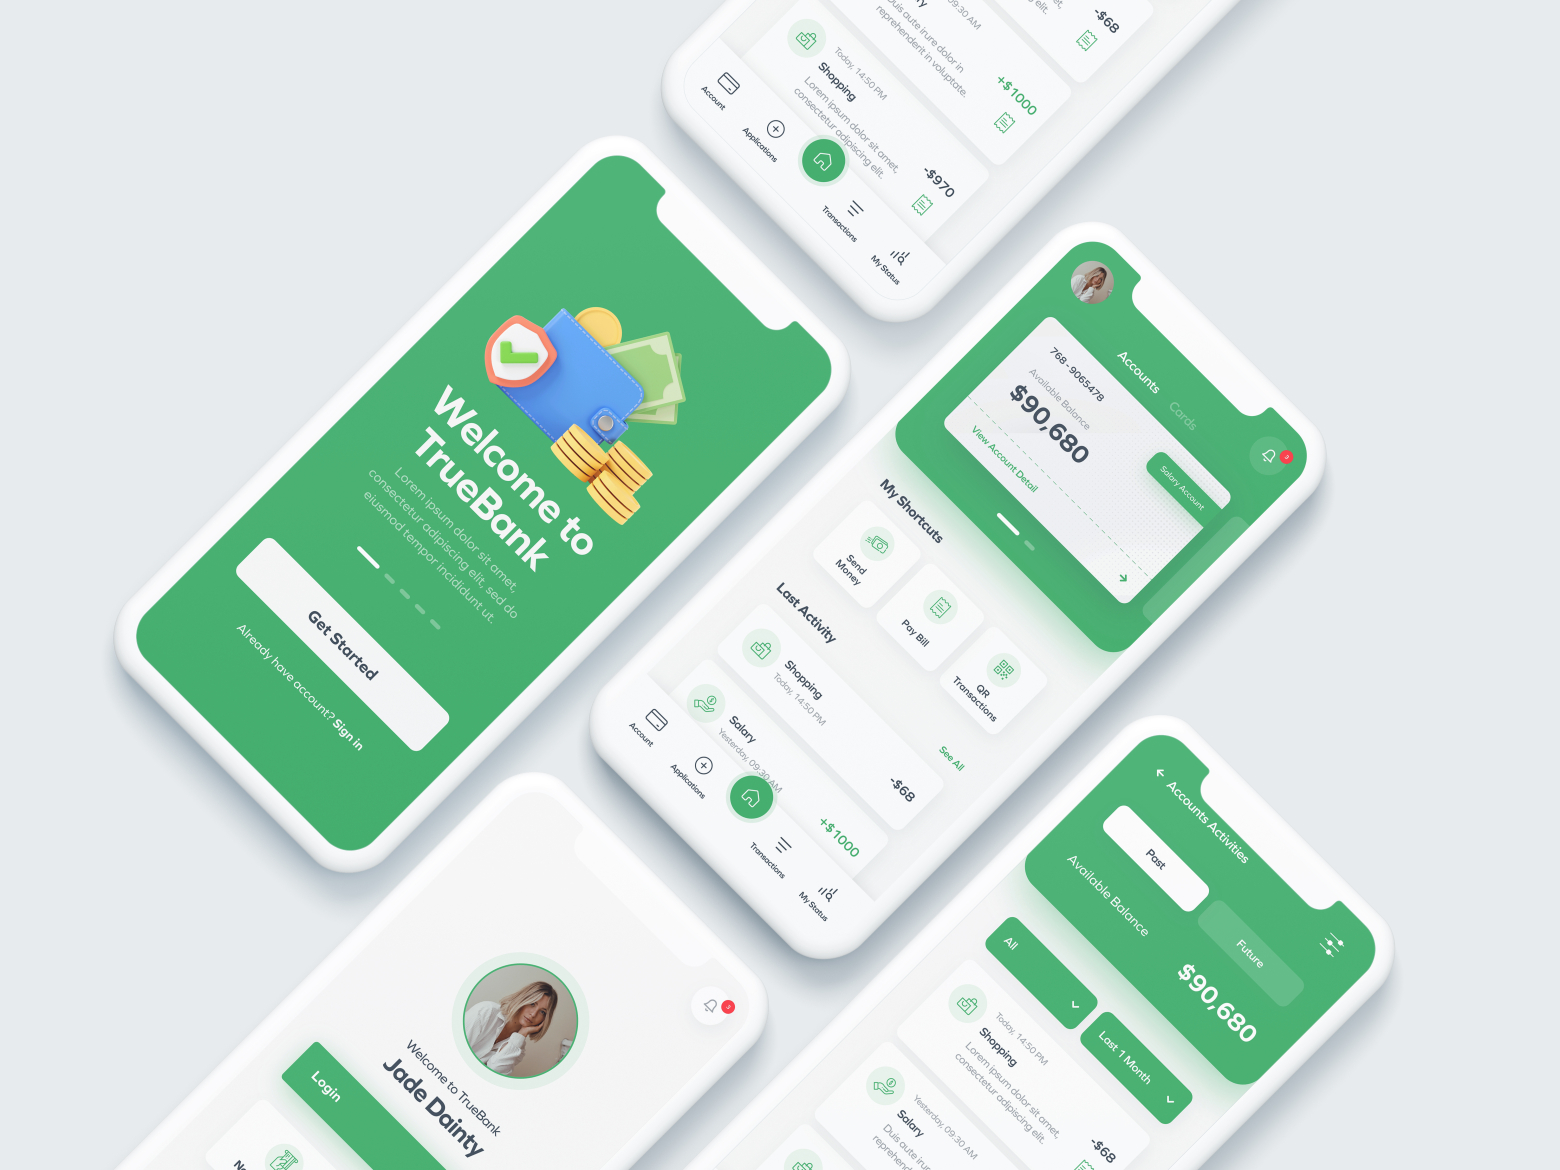 Banking App Concept by Pınar Ülker on Dribbble